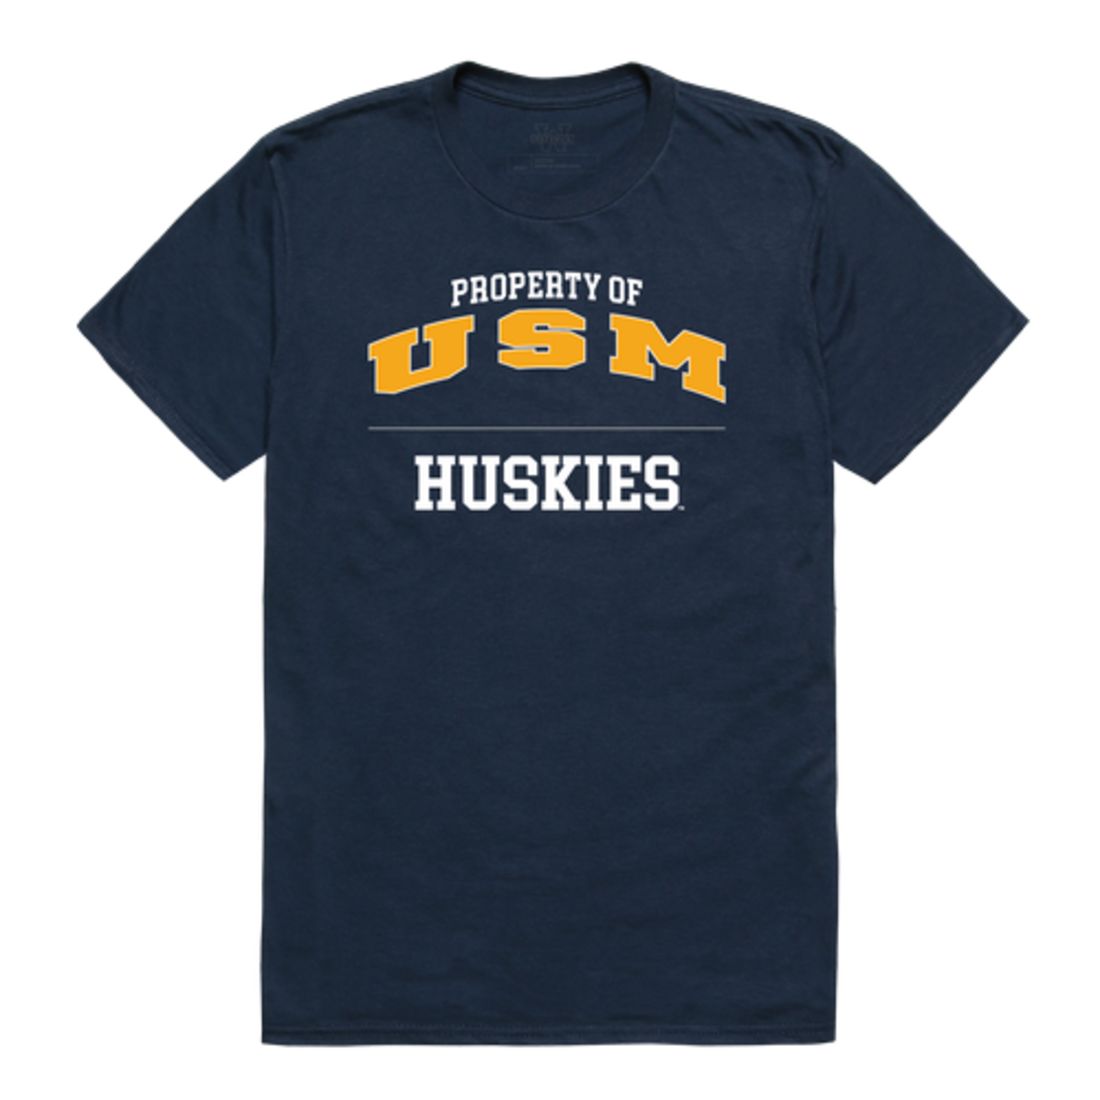 University of Southern Maine Huskies Property T-Shirt